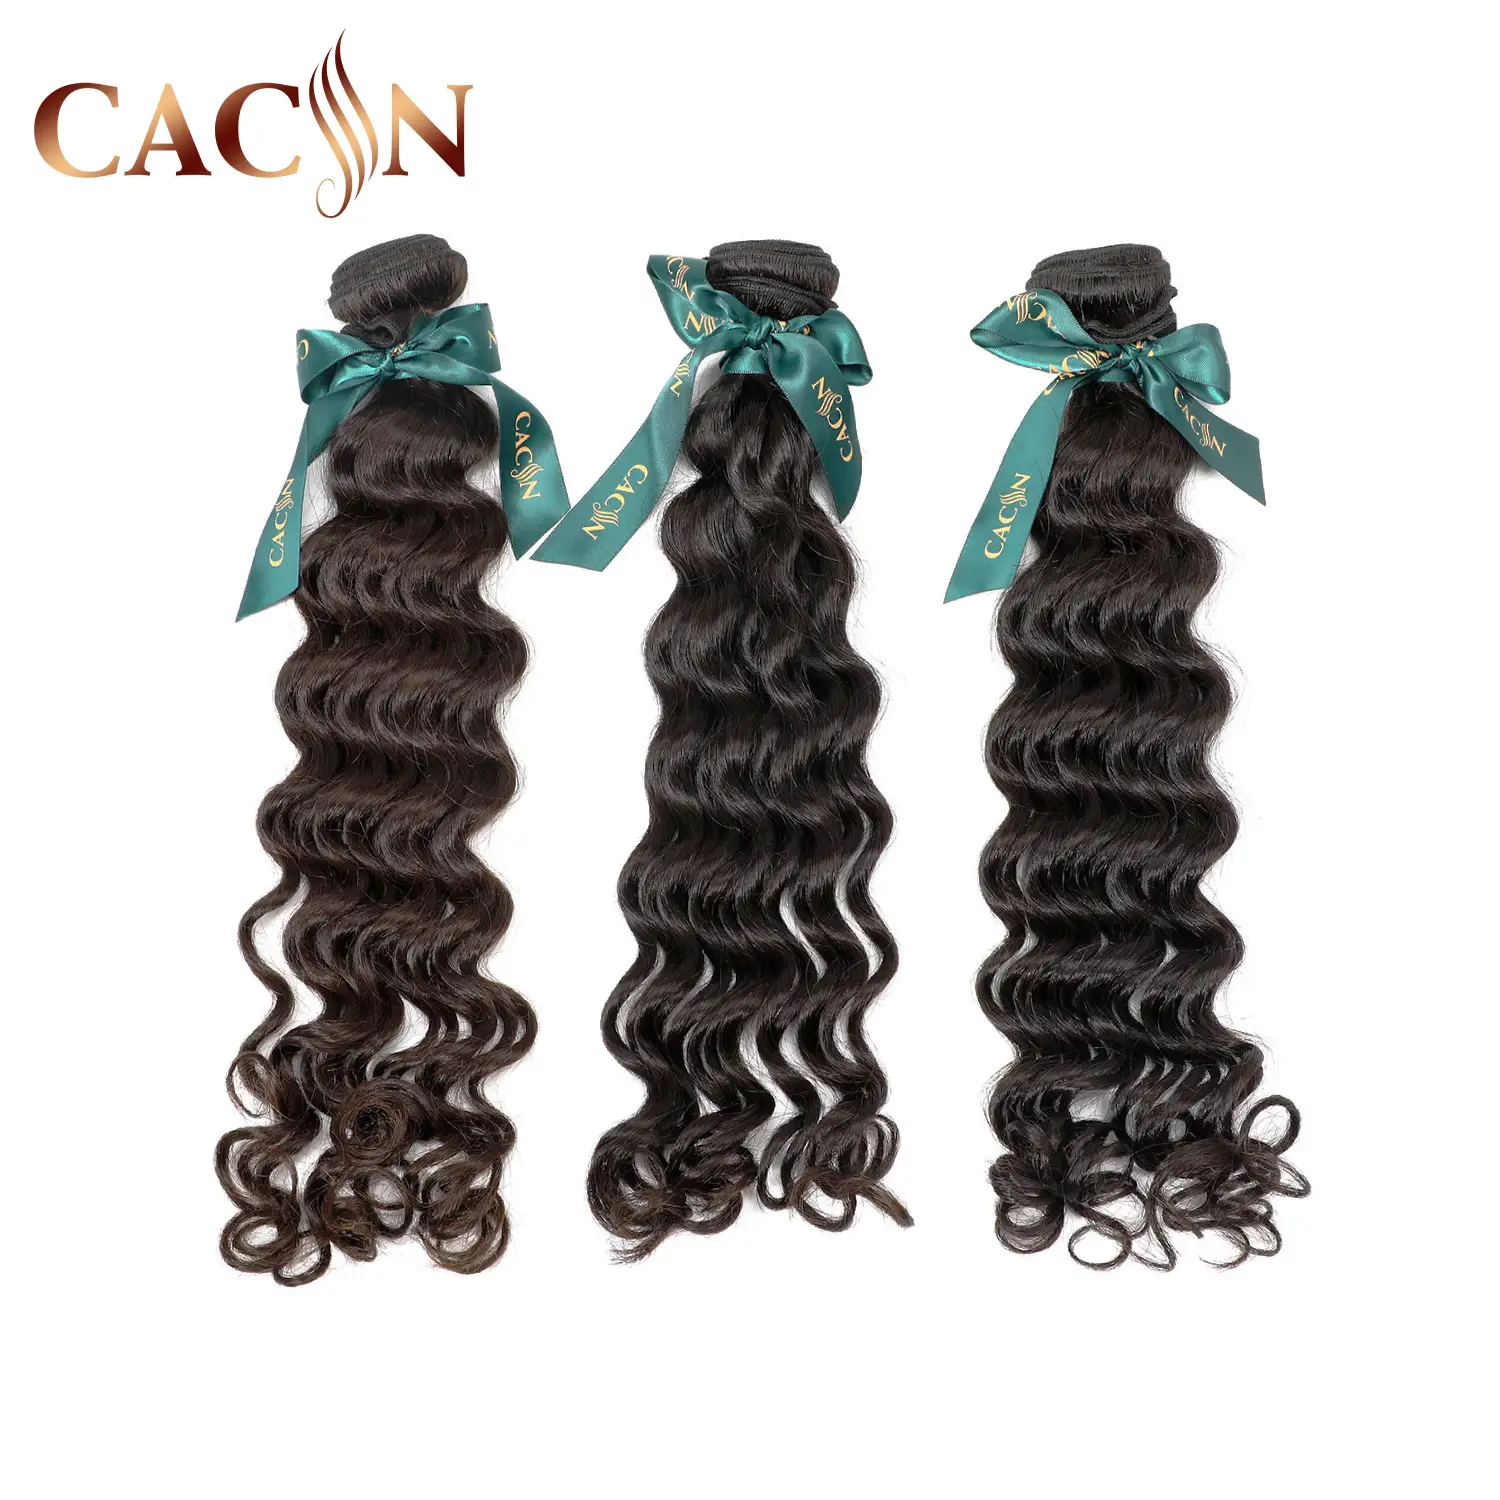 Peruvian deep wave raw virgin hair 3 & 4 bundles, raw virgin hair weave, free shipping